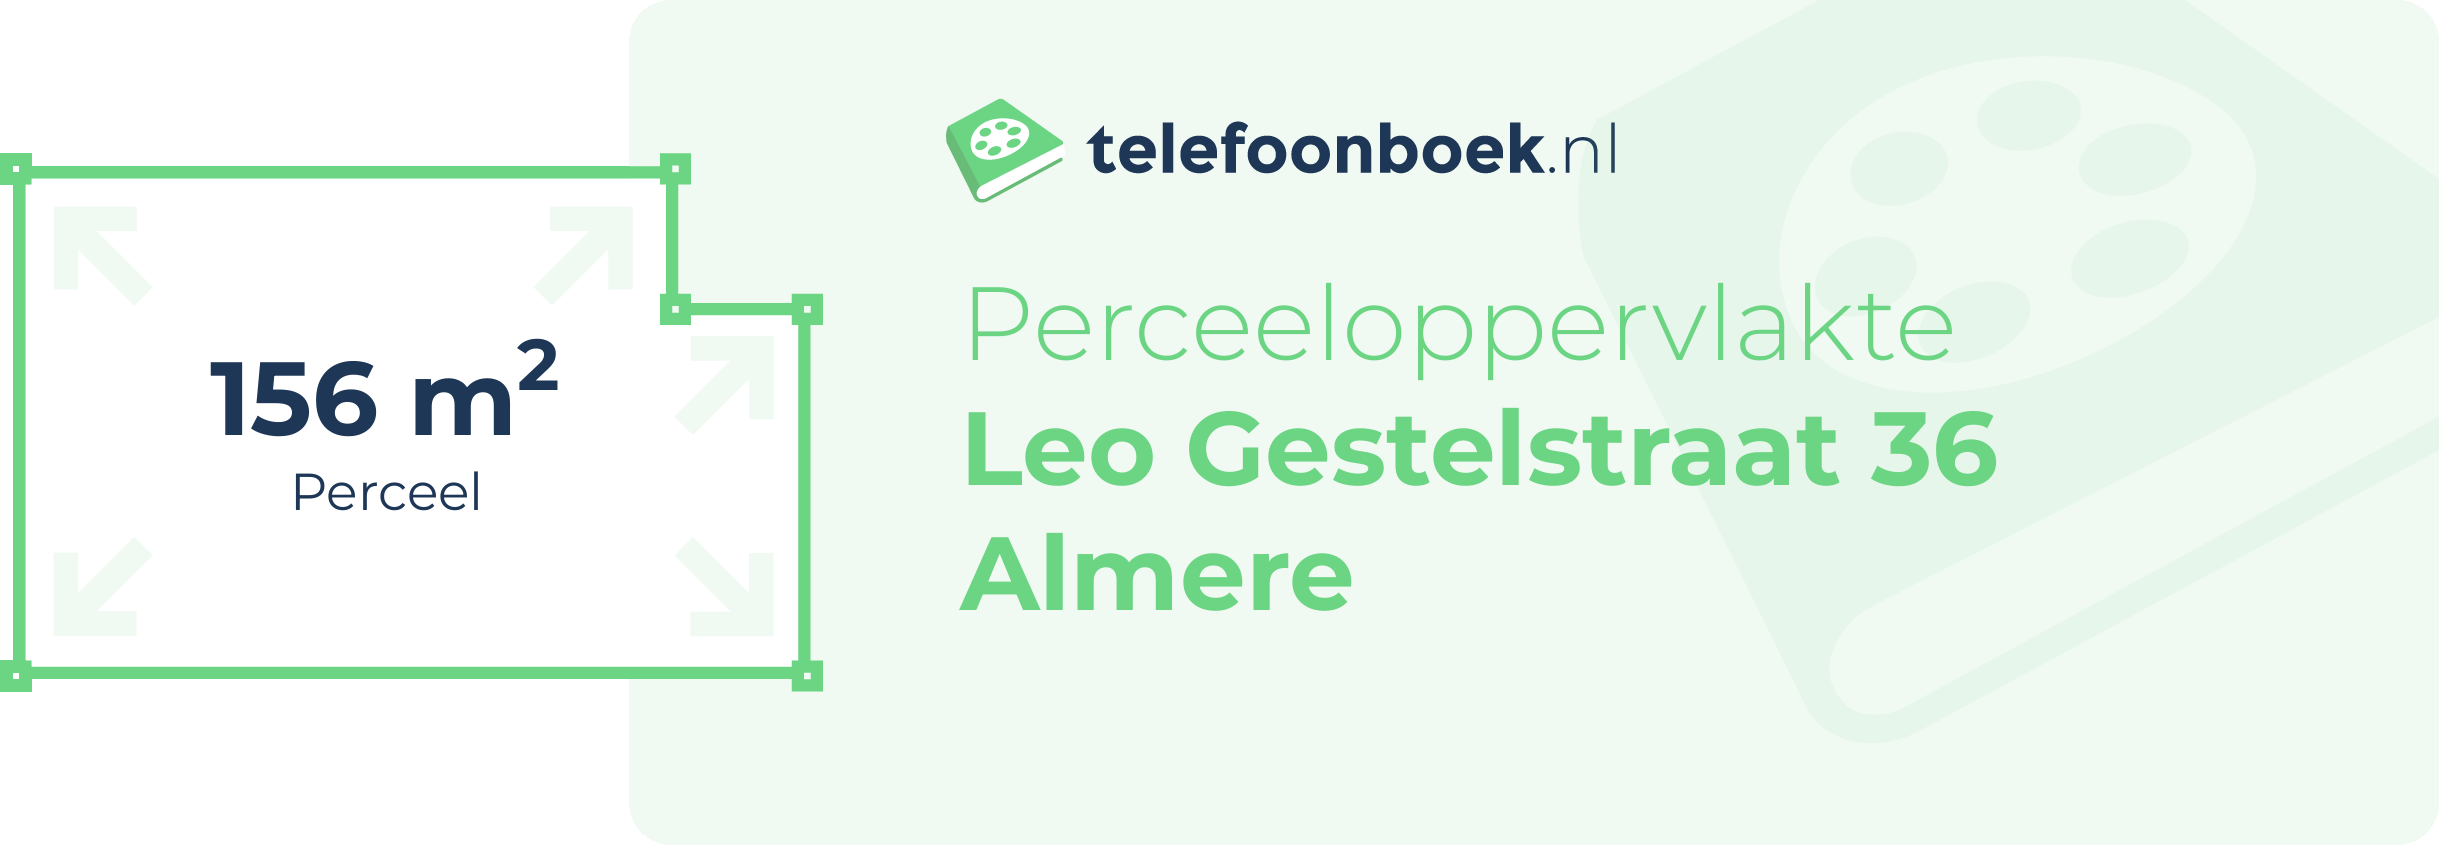 Perceeloppervlakte Leo Gestelstraat 36 Almere